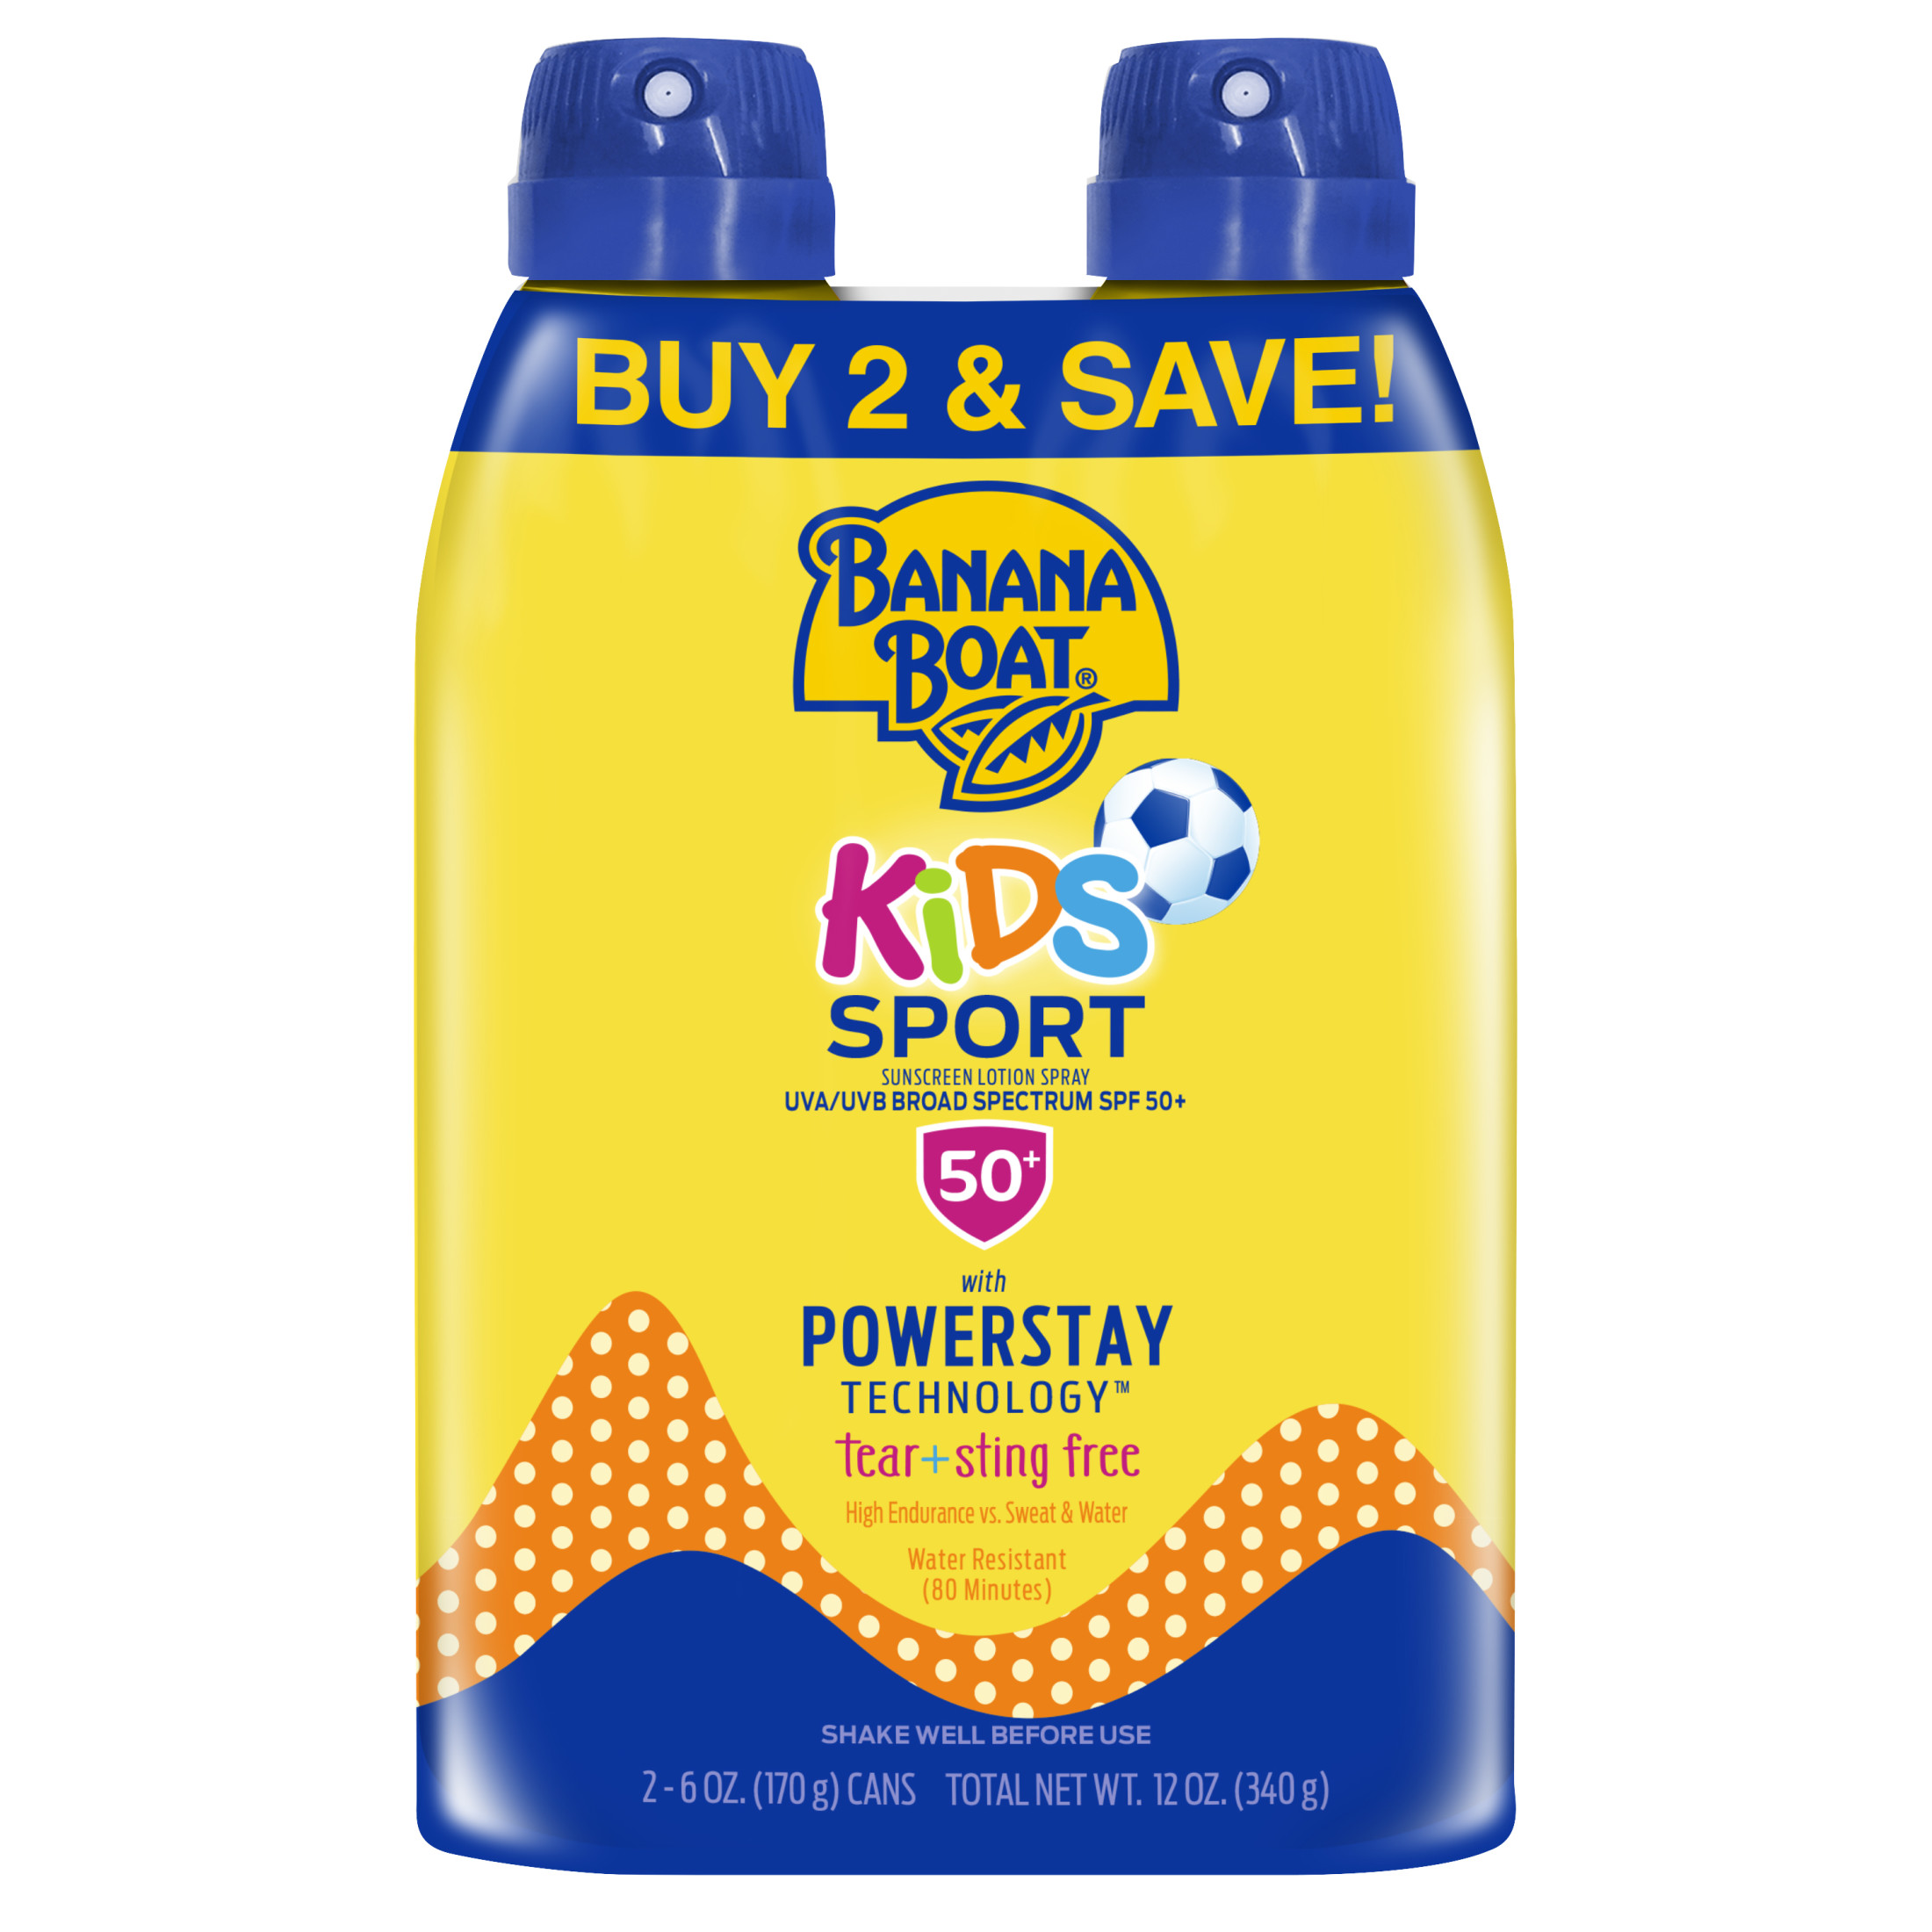 Banana Boat Kids Sport Sunscreen Spray SPF 50, 6oz each Twin Pack - image 1 of 11